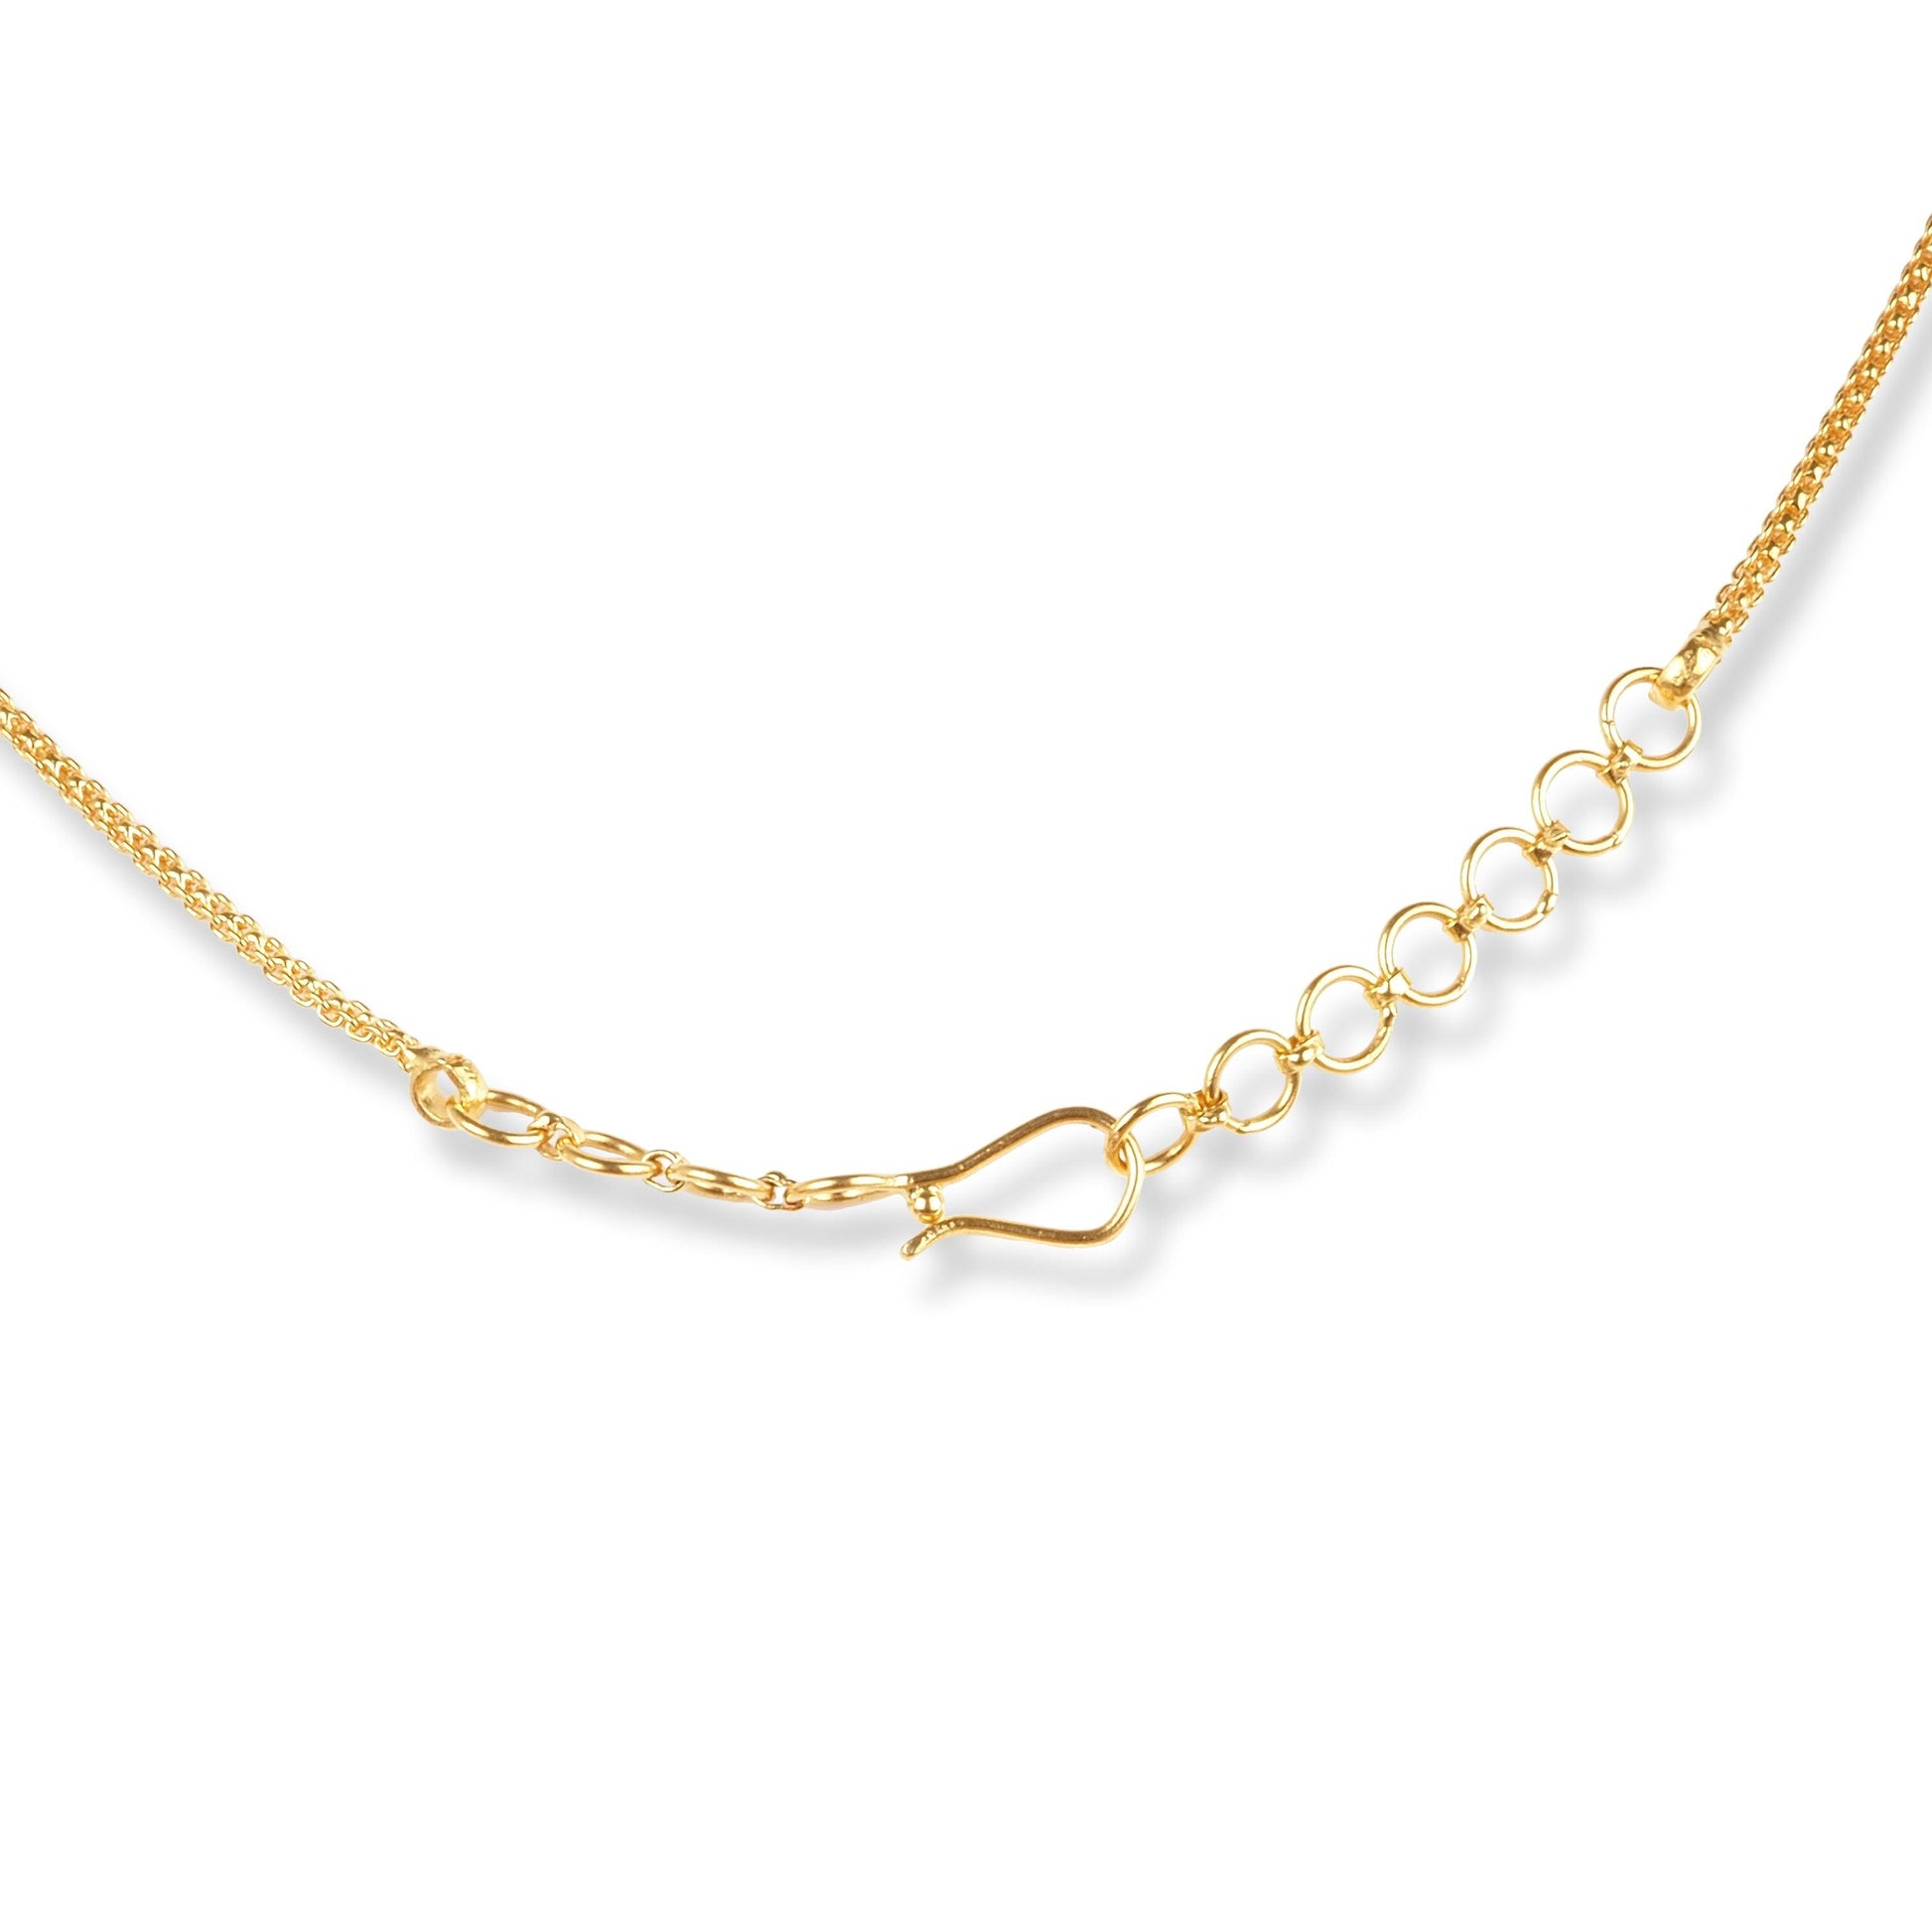 22ct Gold Set with Filigree Work & Heart Design N-7903 - Minar Jewellers